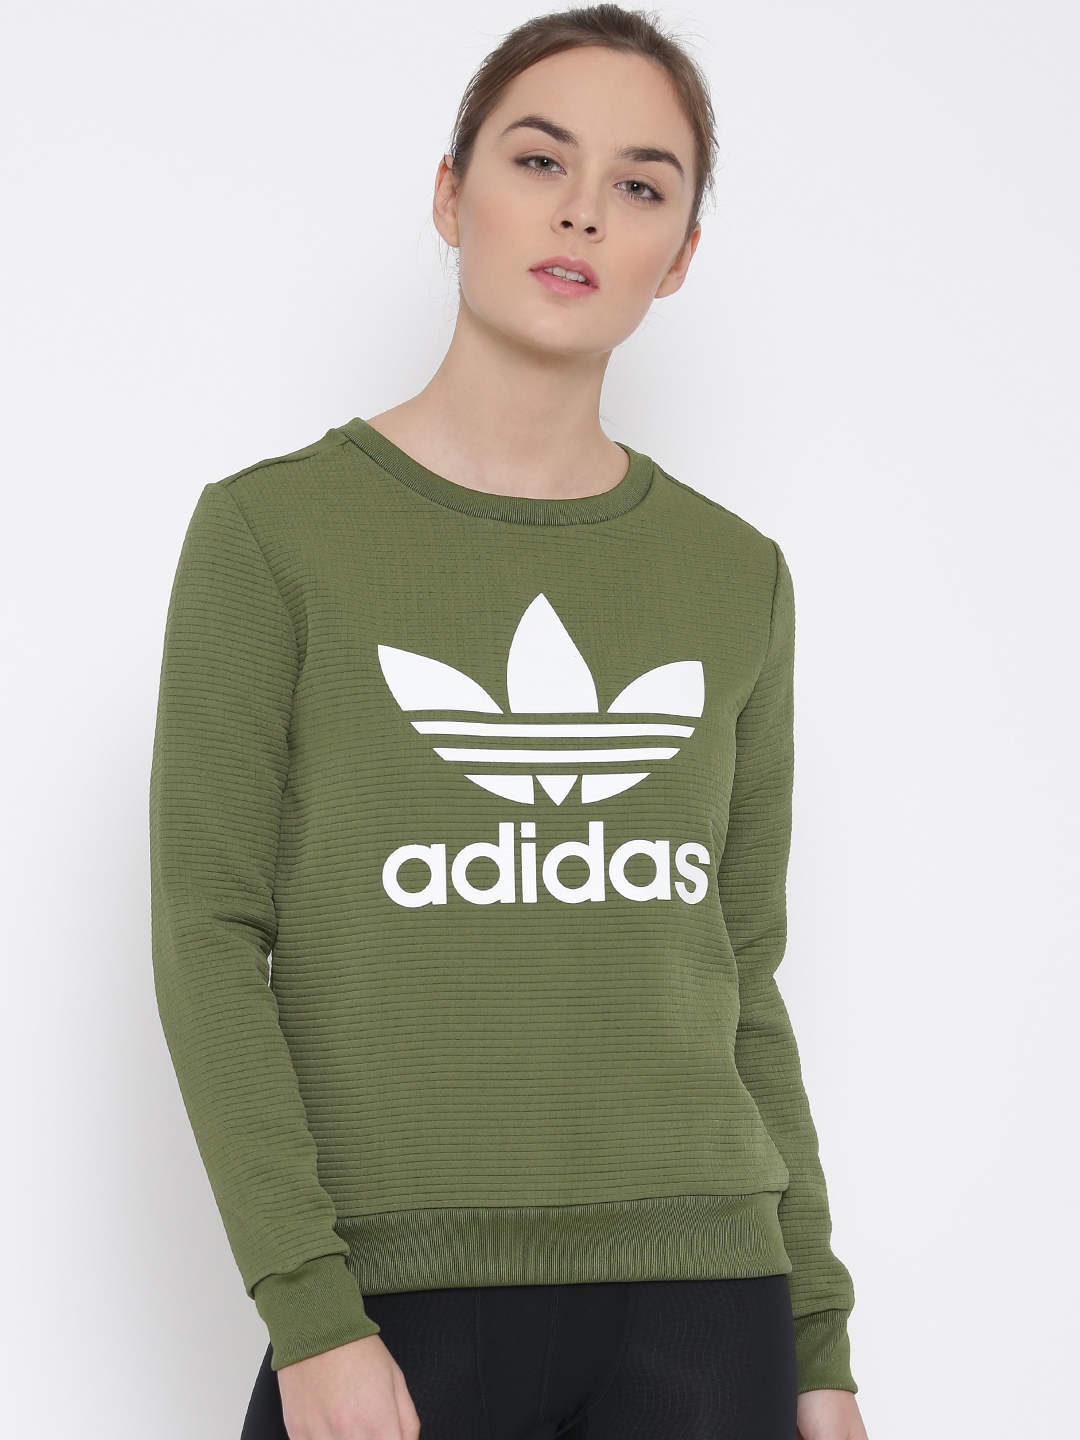 adidas sweatshirts online